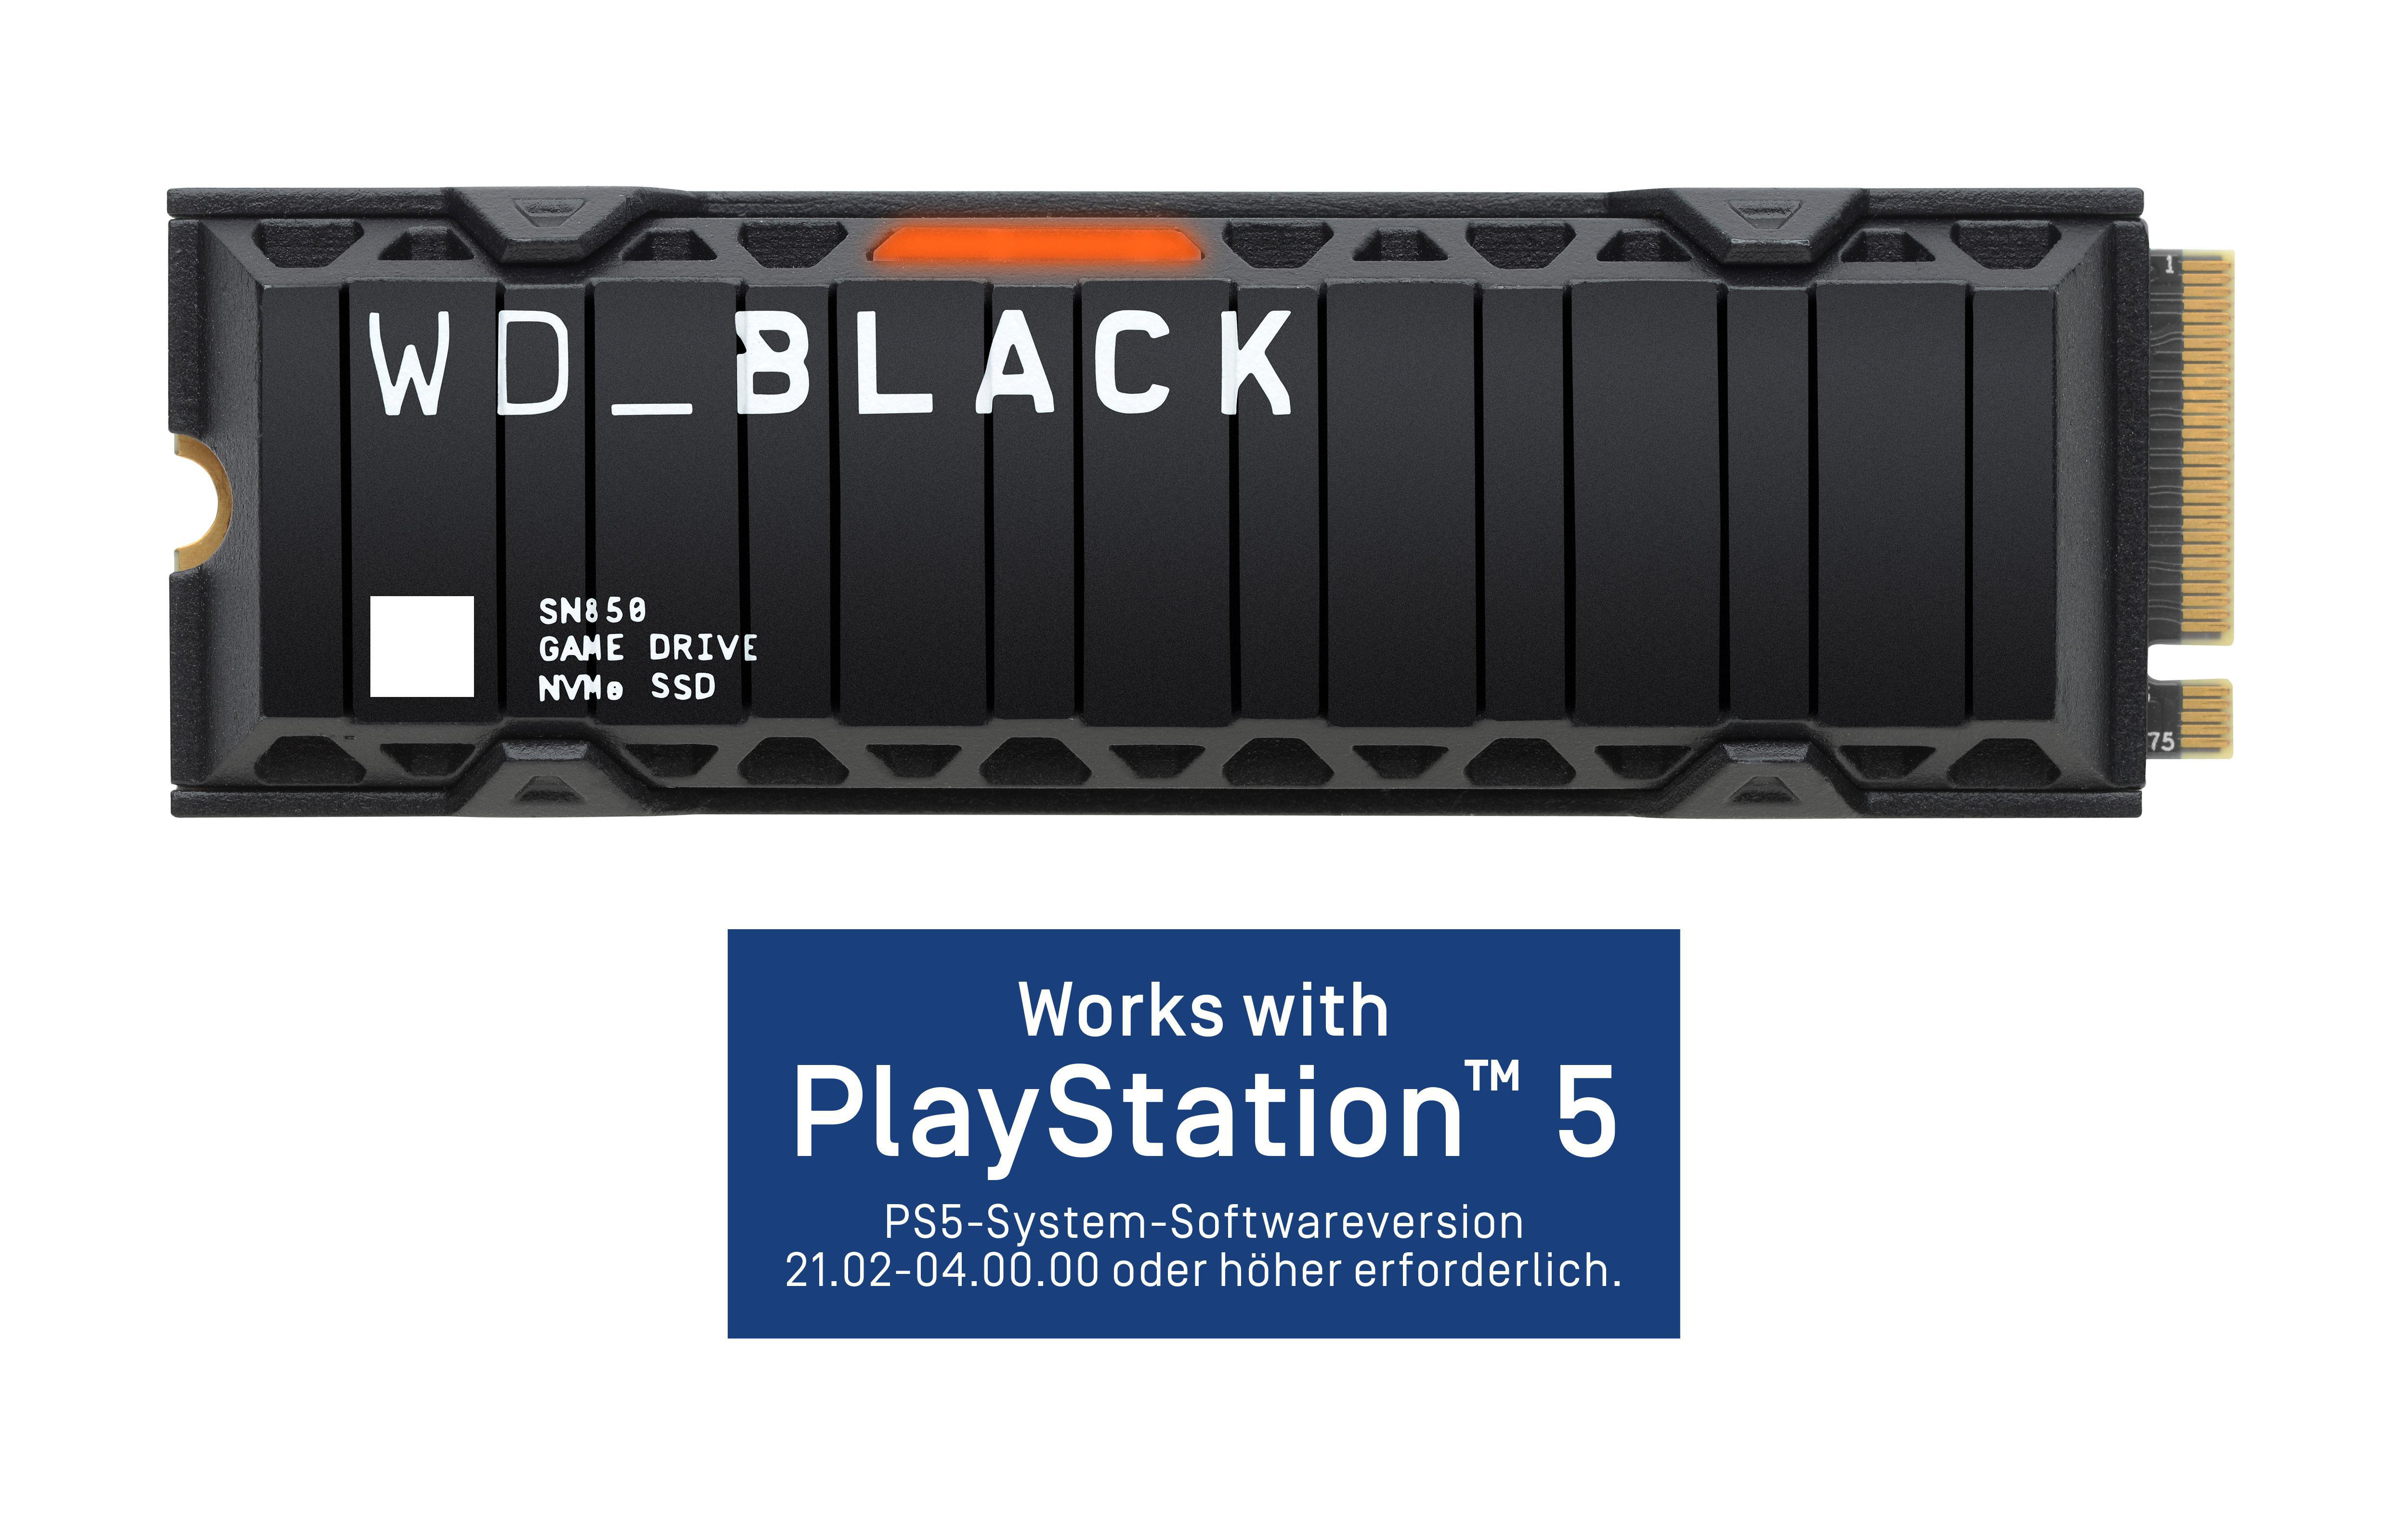 WD_BLACK SN850 mit Kühlkörper - PCI 5*, PlayStation™ intern Express, Works TB SSD SSD, 2 with Gaming